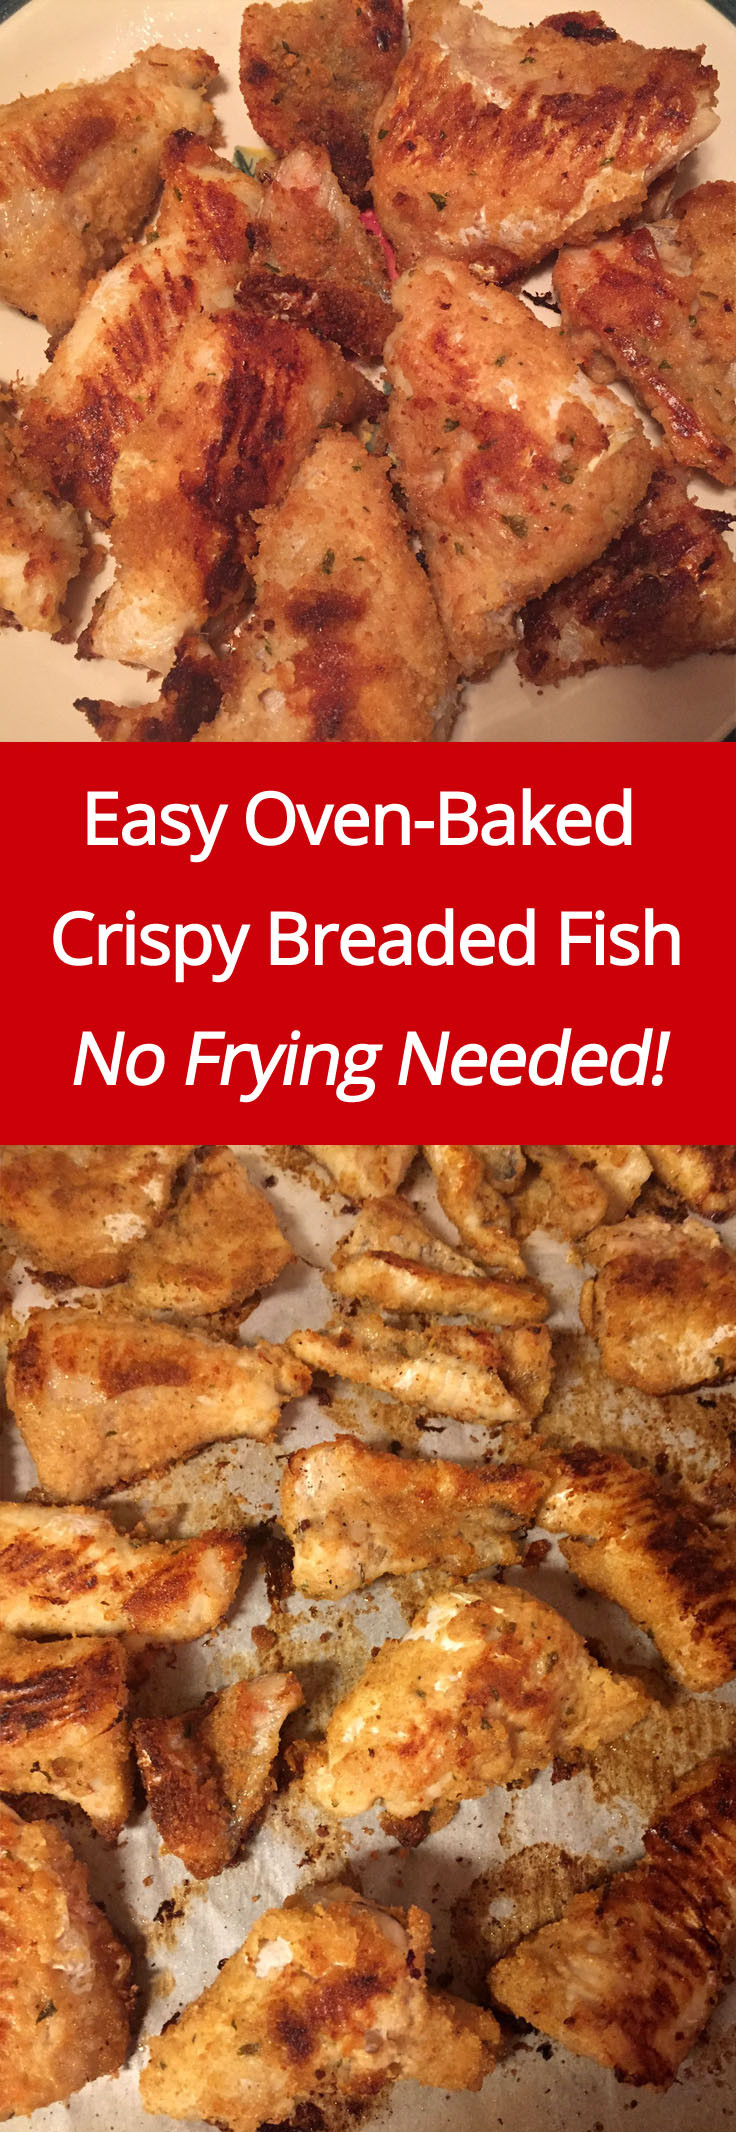 Recipes Baked Fish
 Crispy Oven Baked Breaded Fish Recipe – No Frying Needed